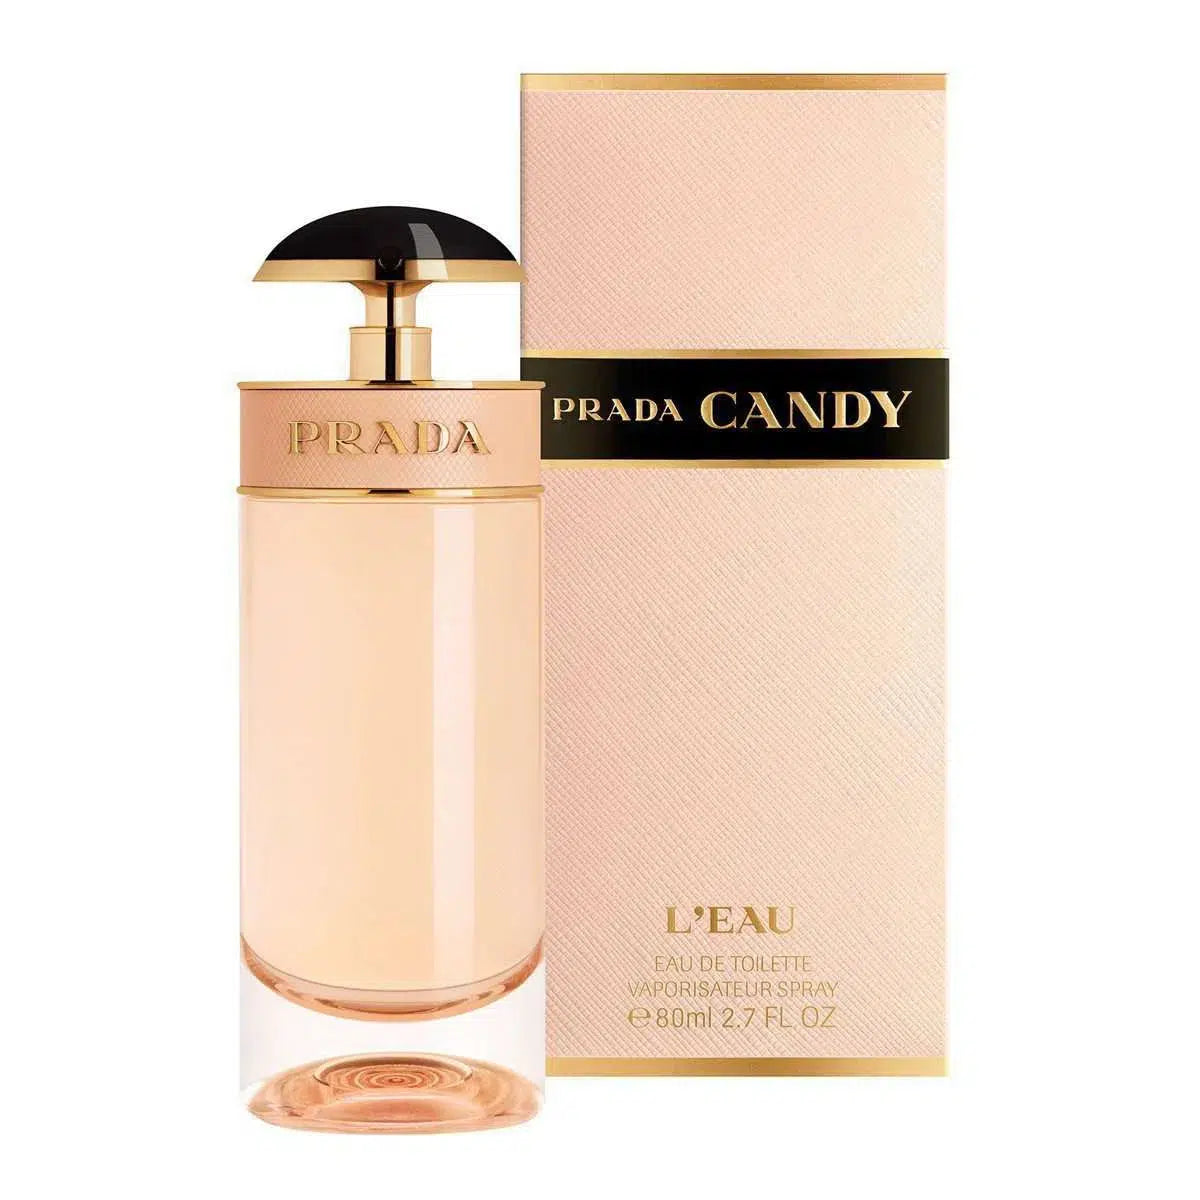 Prada Candy Leau 80ml - Perfume Philippines